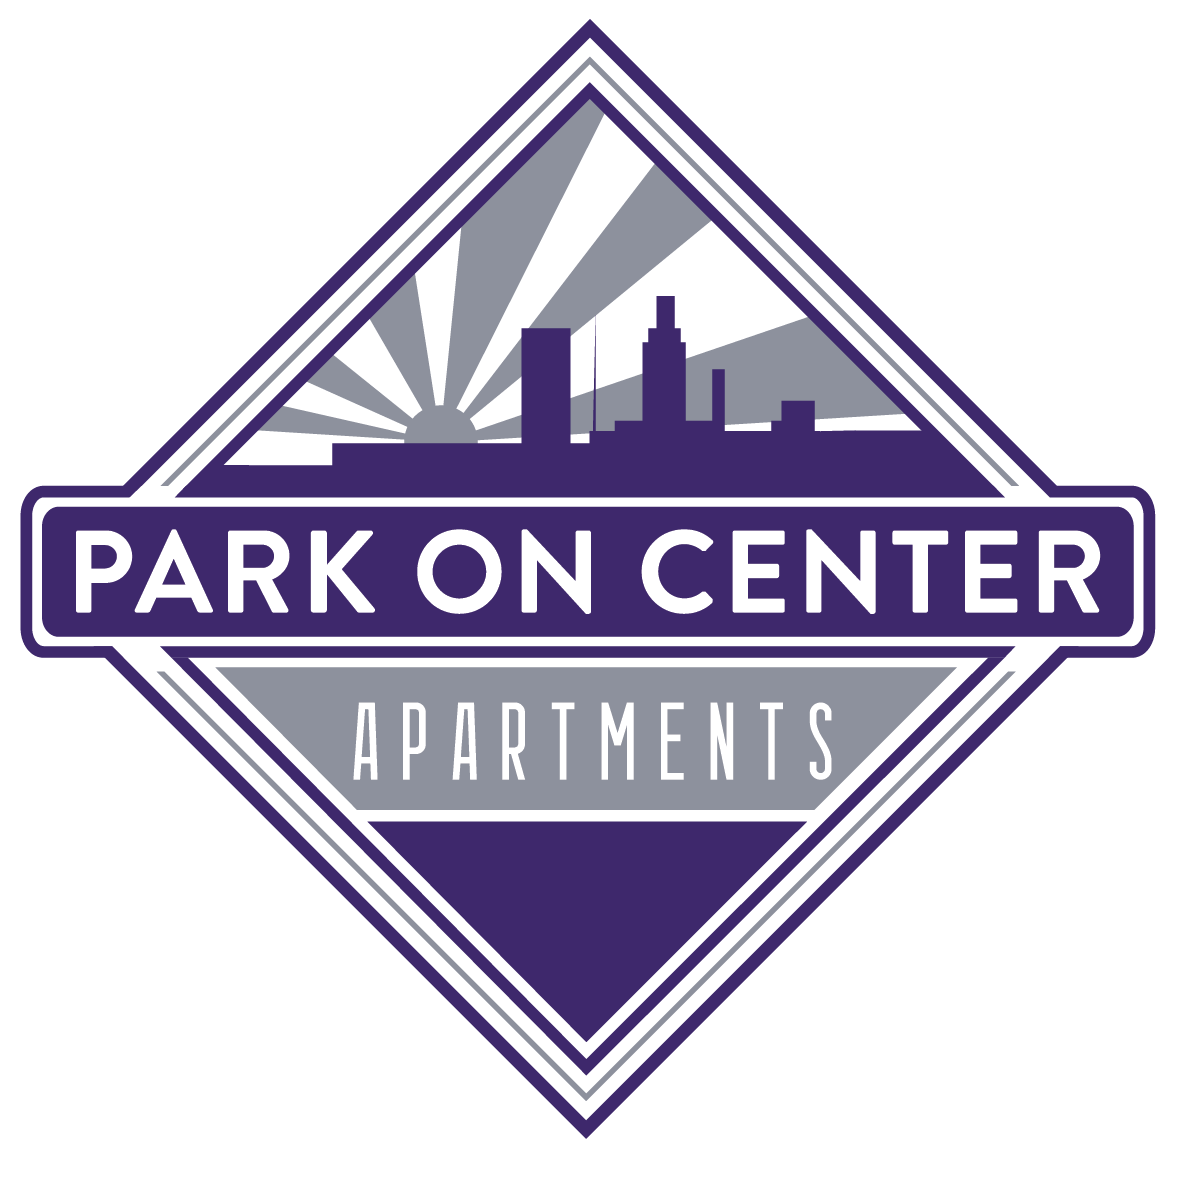 Park on Center Apartments